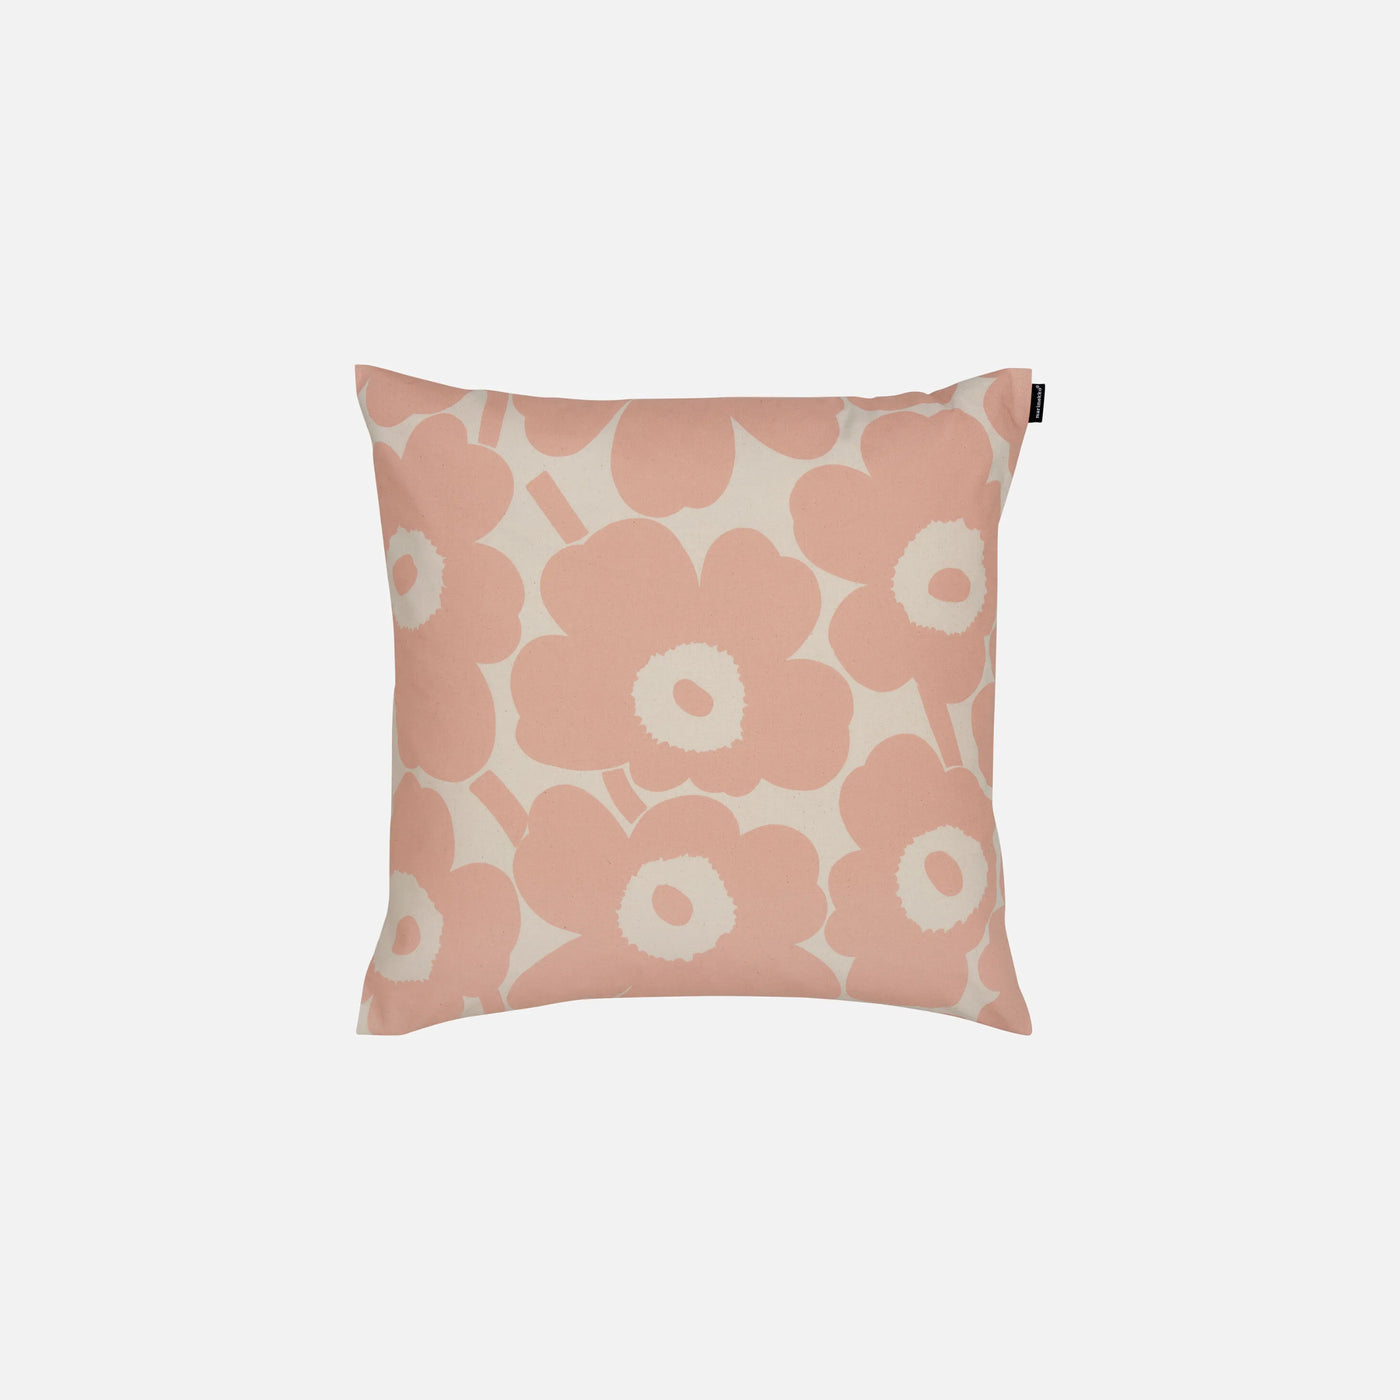 Pieni Unikko Cushion Cover 50 X 50 Cm - peach